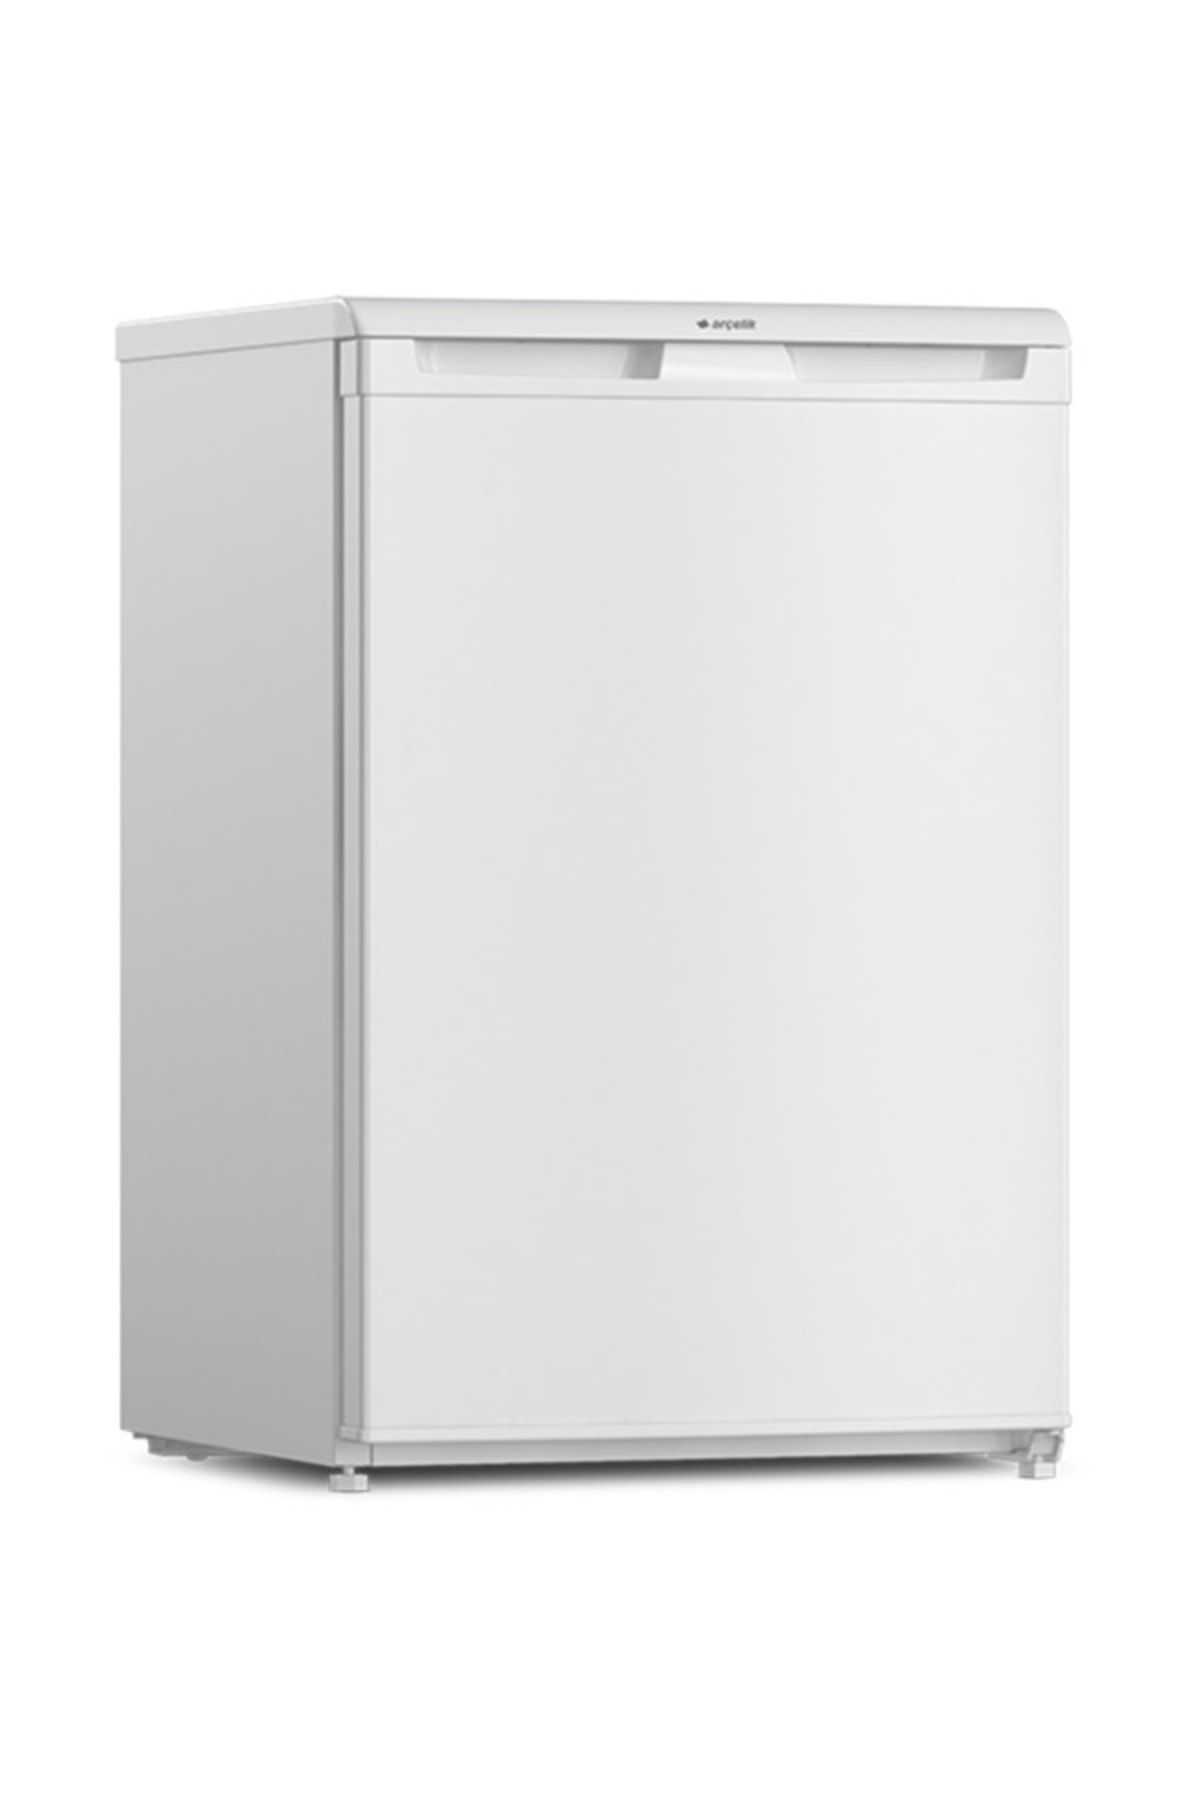 Arçelik No Frost Mini Buzdolabı 114 L Kapı Yönü Değiştirme Özellği, Beyaz Renk, 154140 Mb